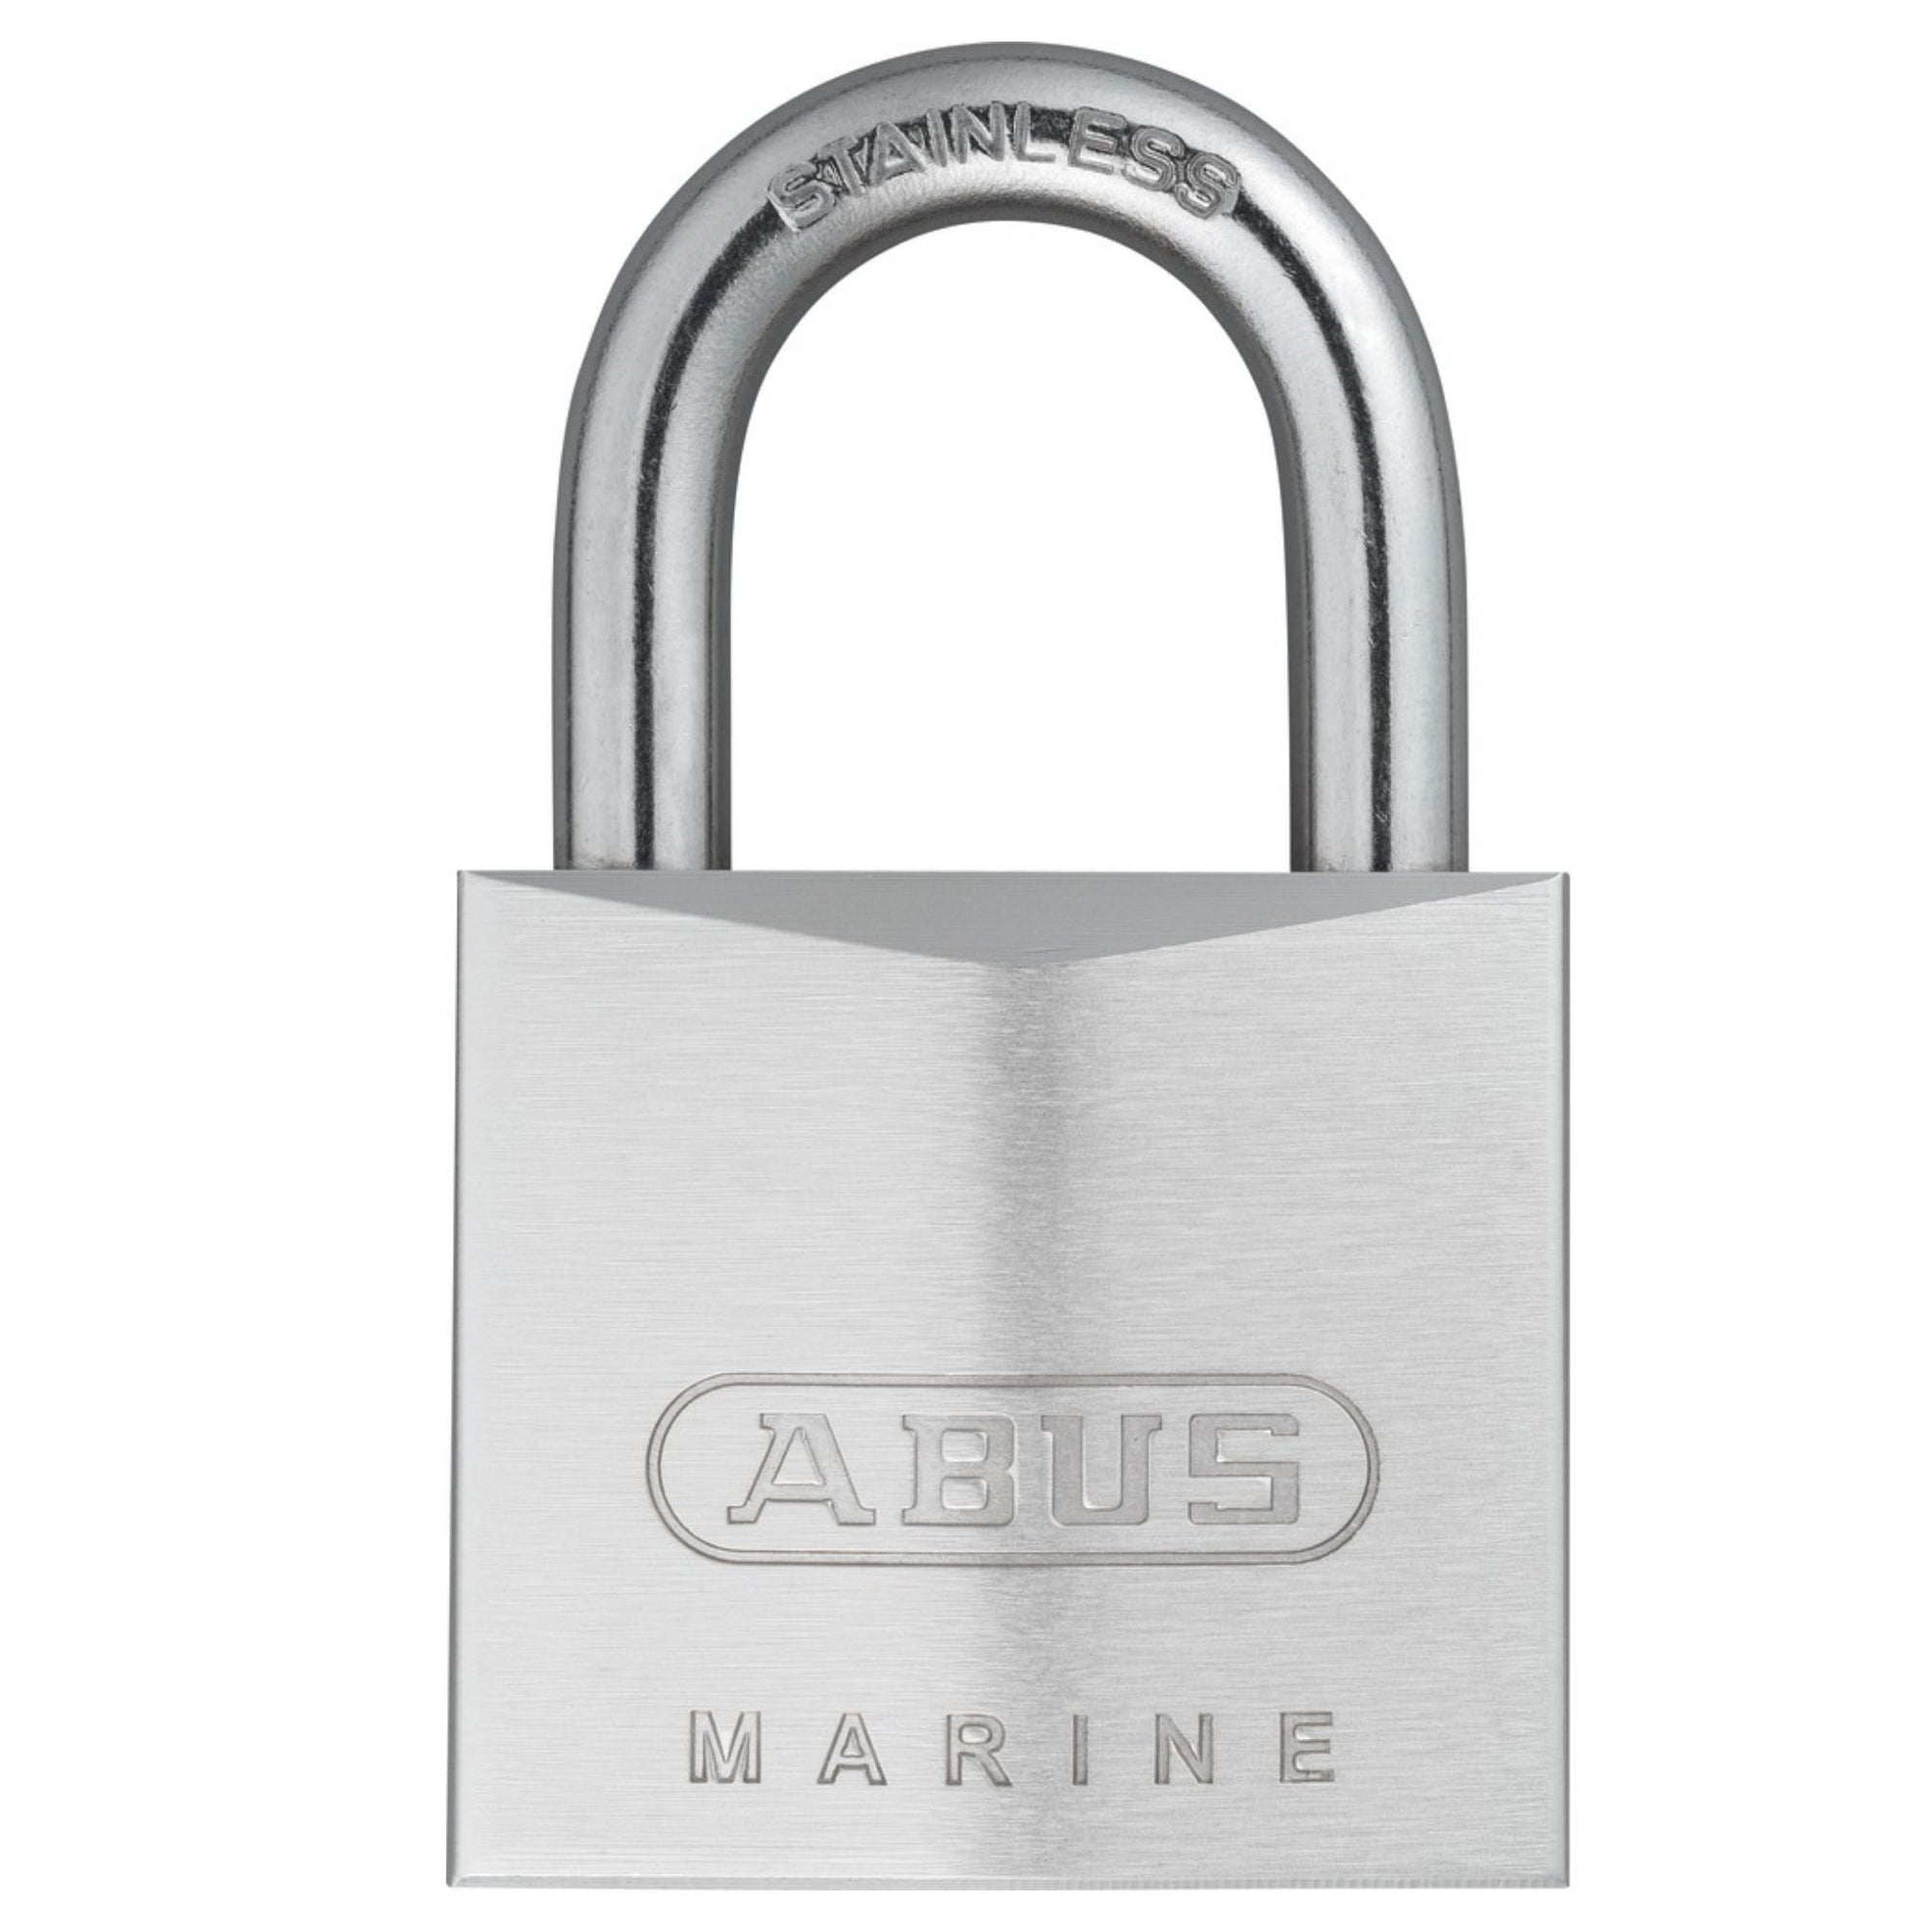 Abus 75IB/40 KD Weatherproof Padlock with Stainless Steel Shackle - The Lock Source